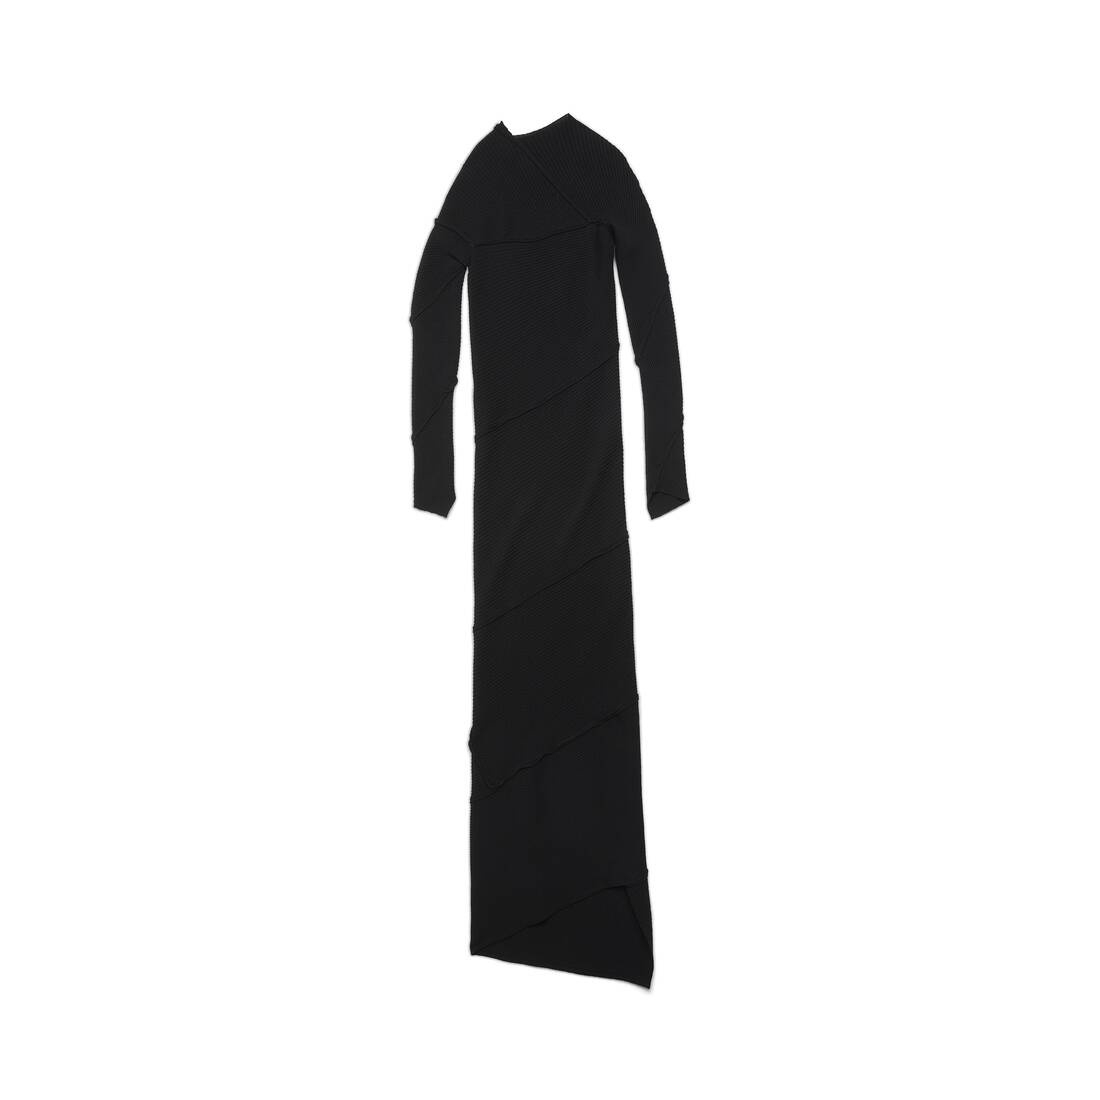 Women's Spiral Maxi Dress in Black - 2